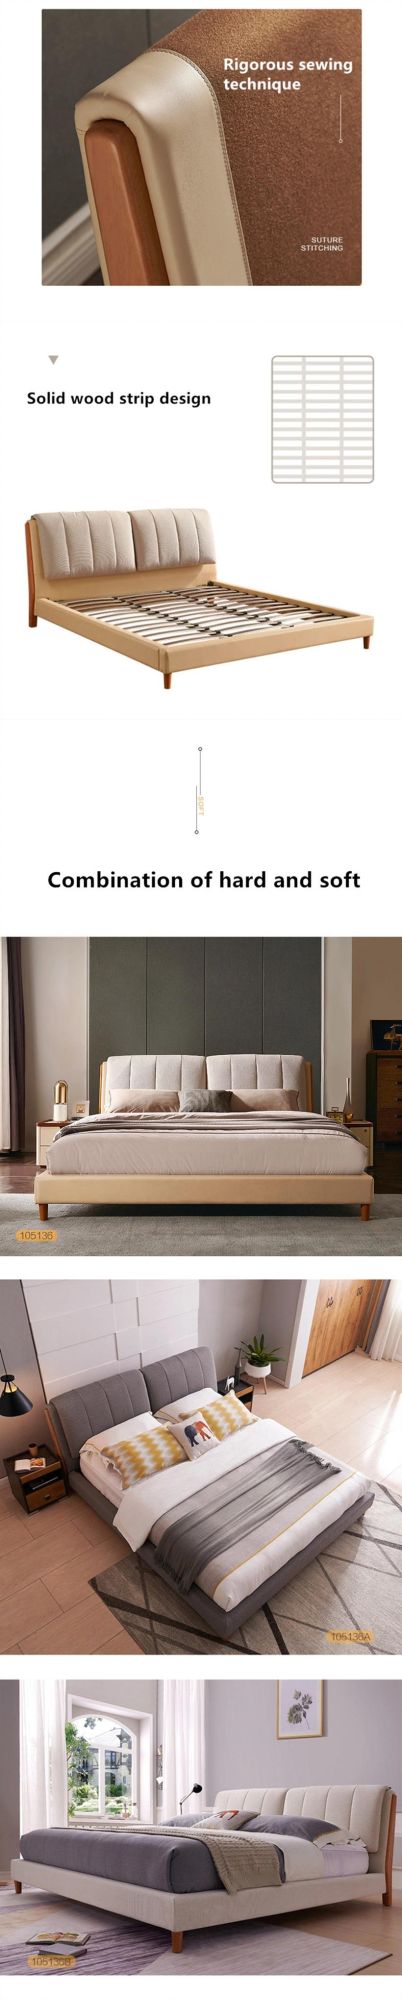 Nordic Simple Soft #Bed Master Bedroom #Furniture 0175